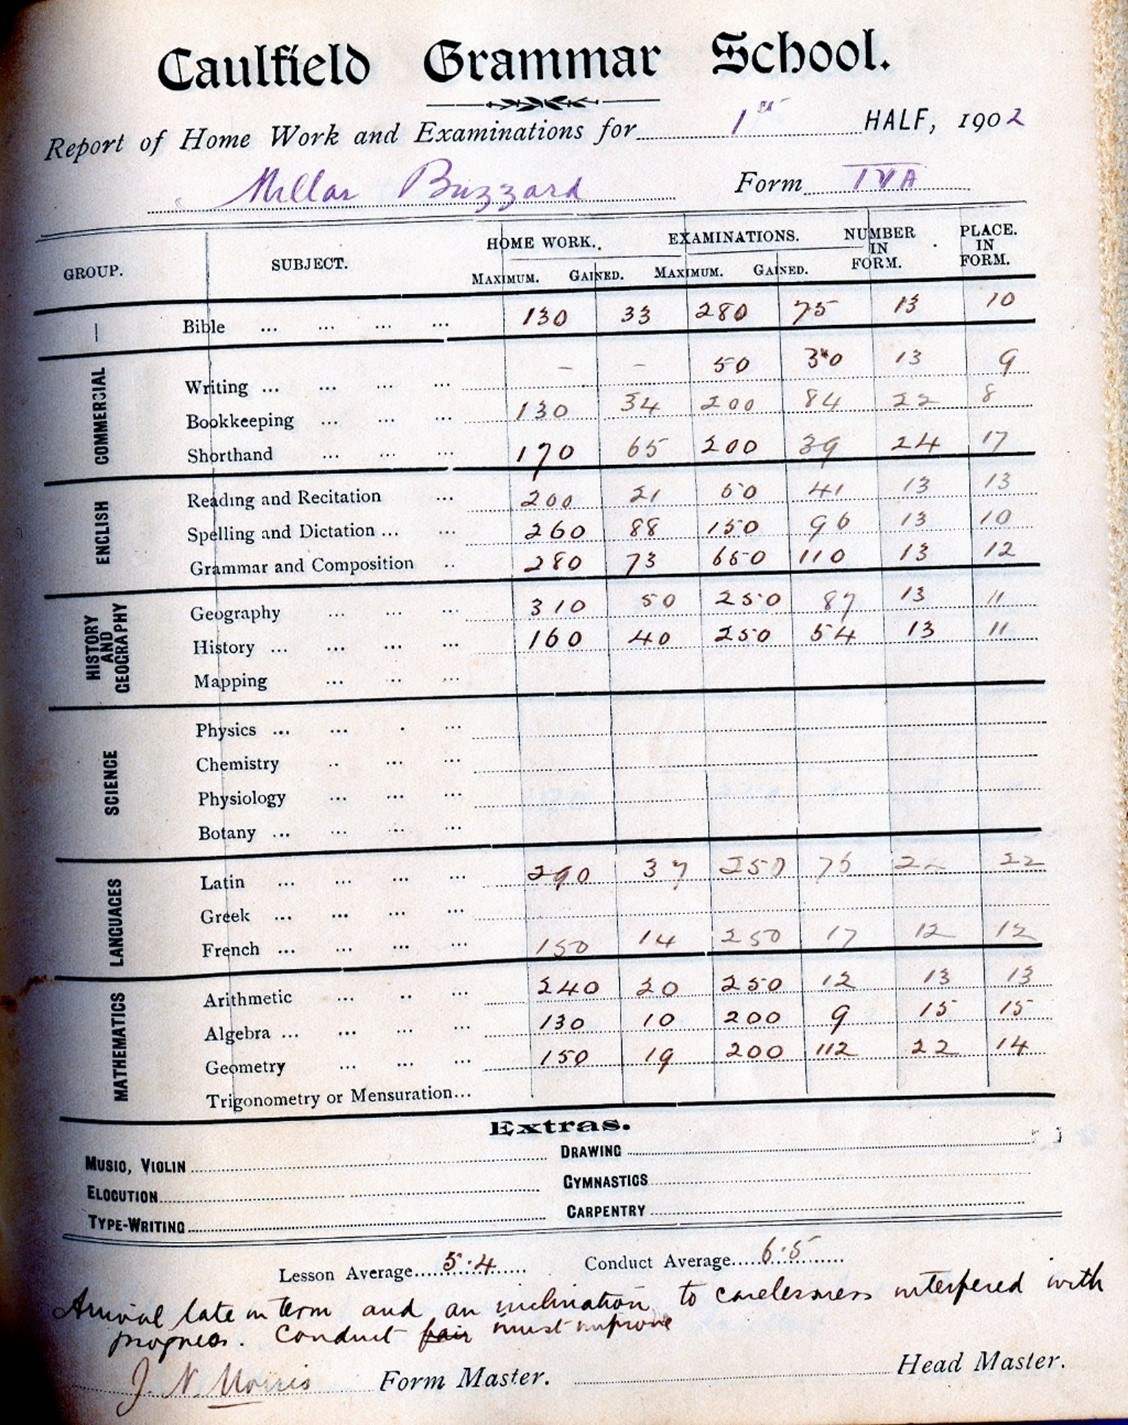 1902 1st Half Form IV A Academic Report